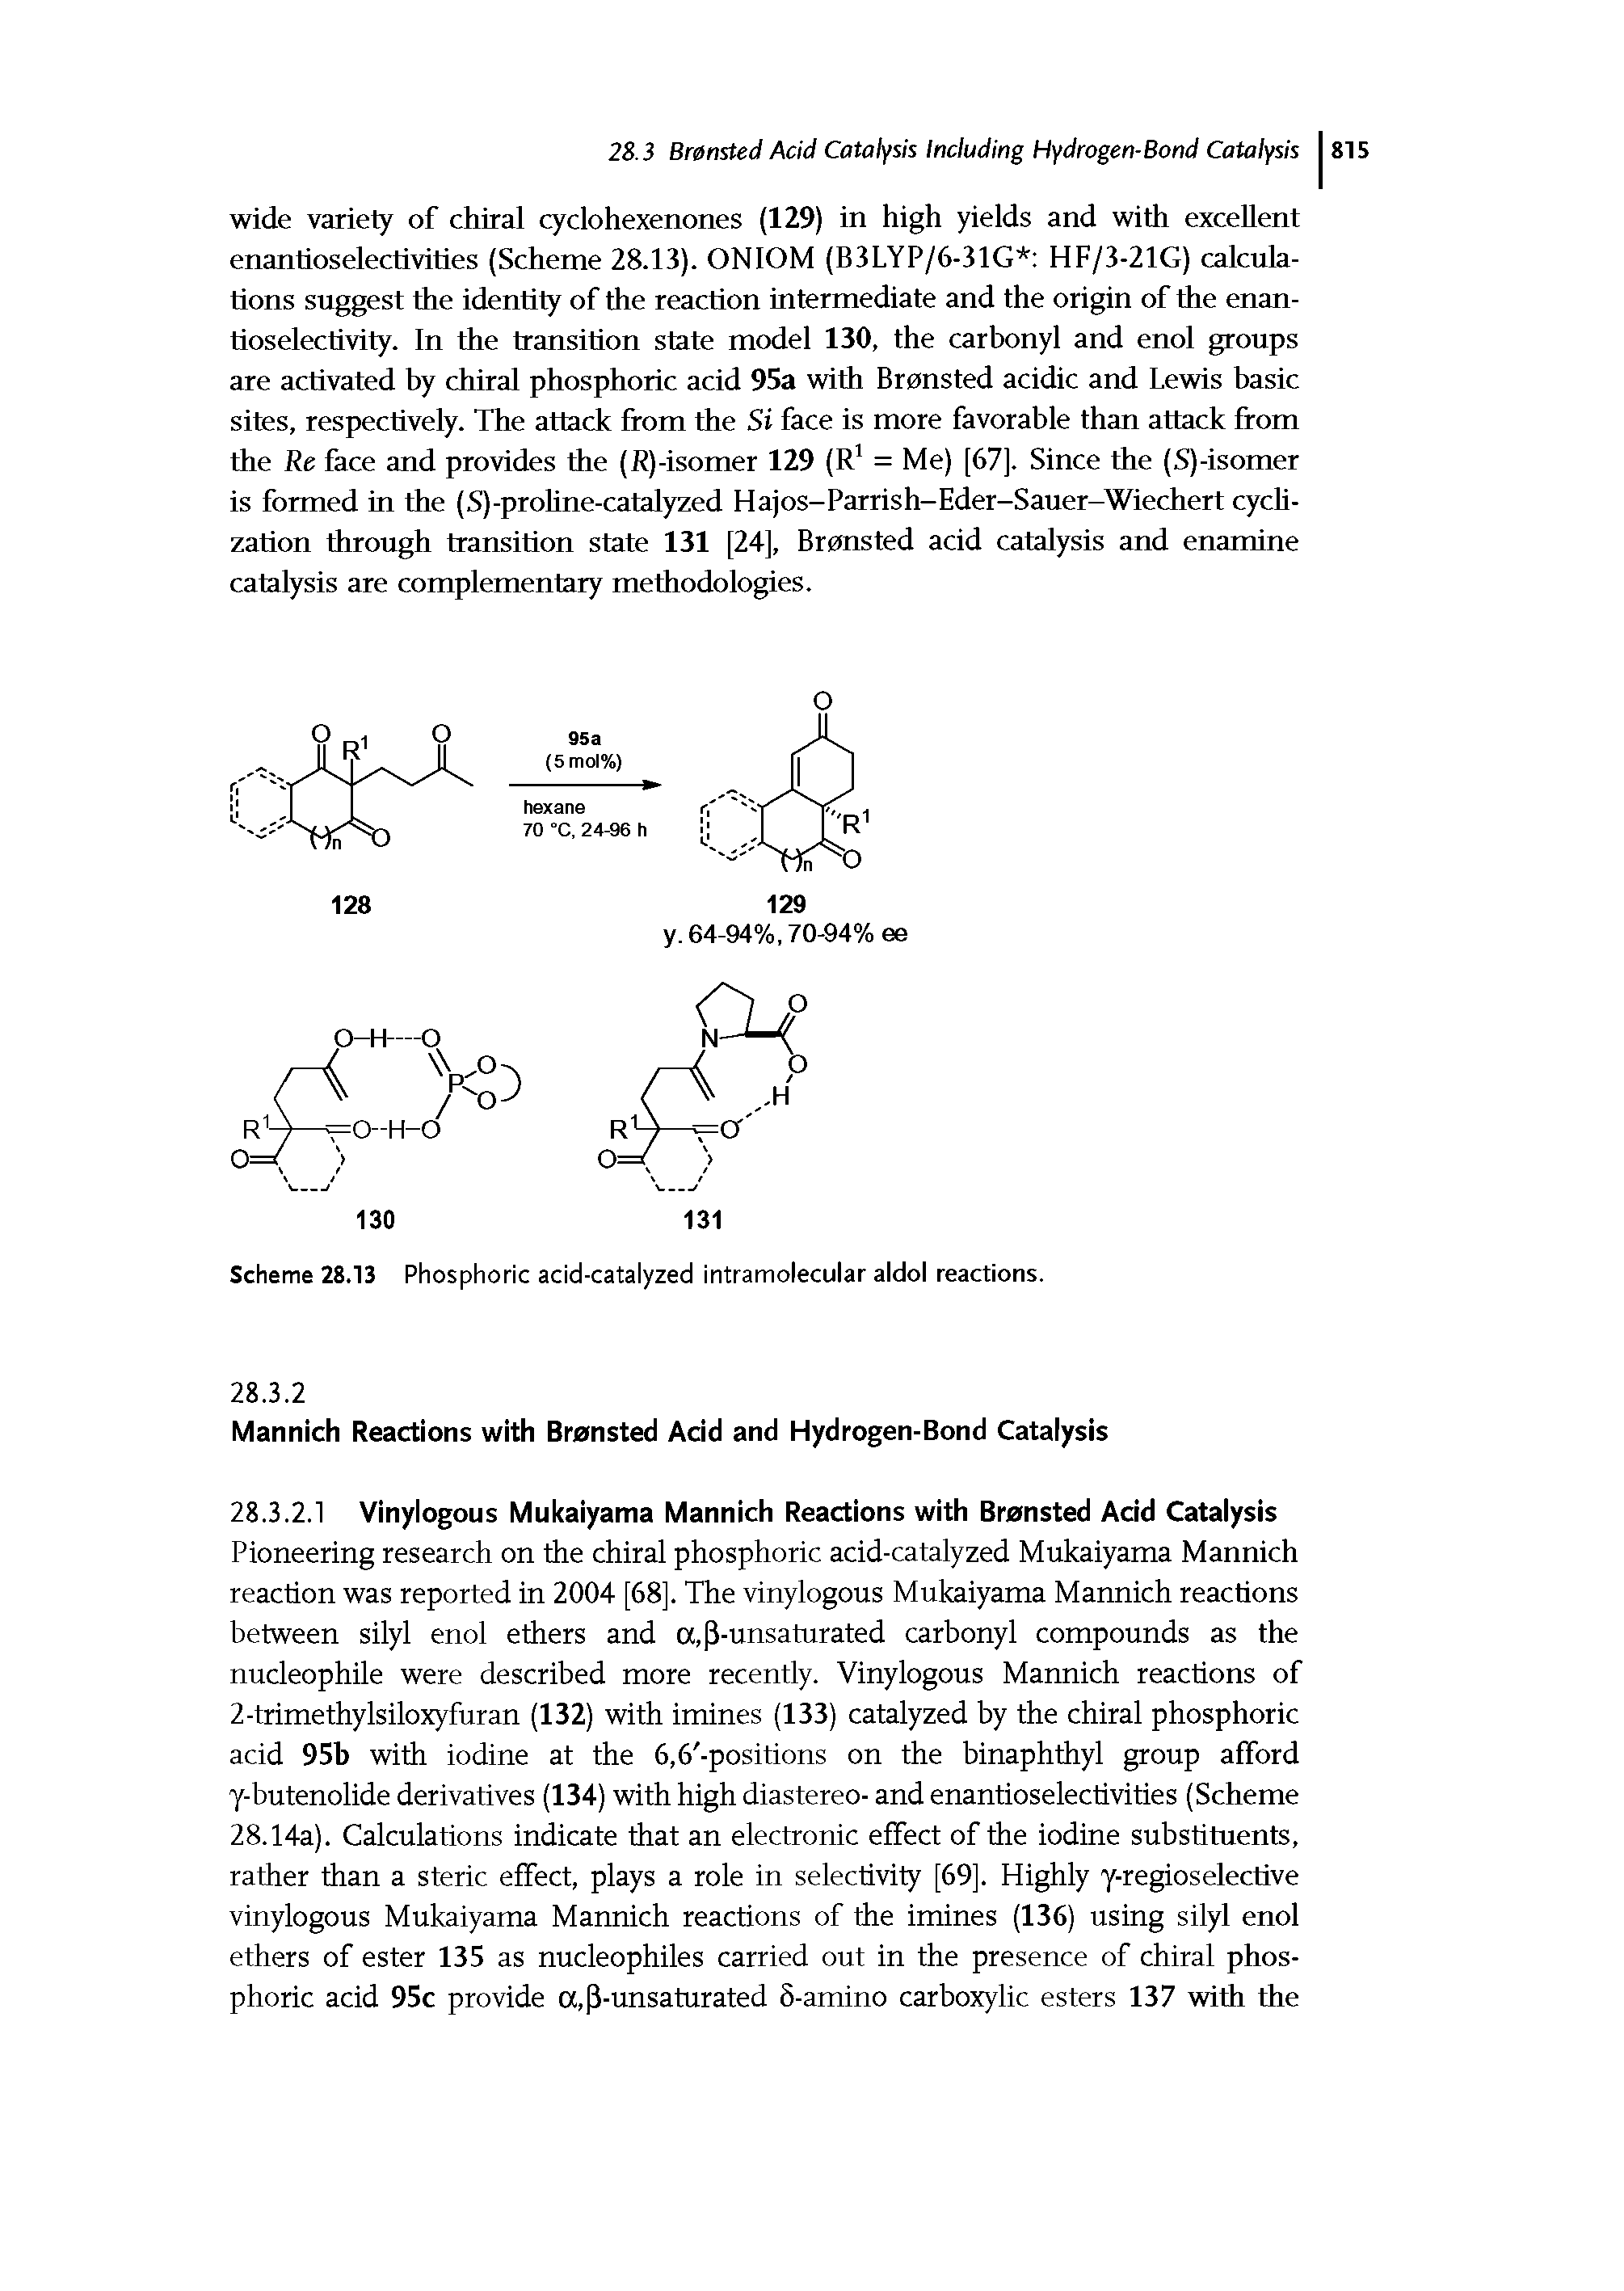 Scheme 28.13 Phosphoric acid-catalyzed intramolecular aldol reactions.